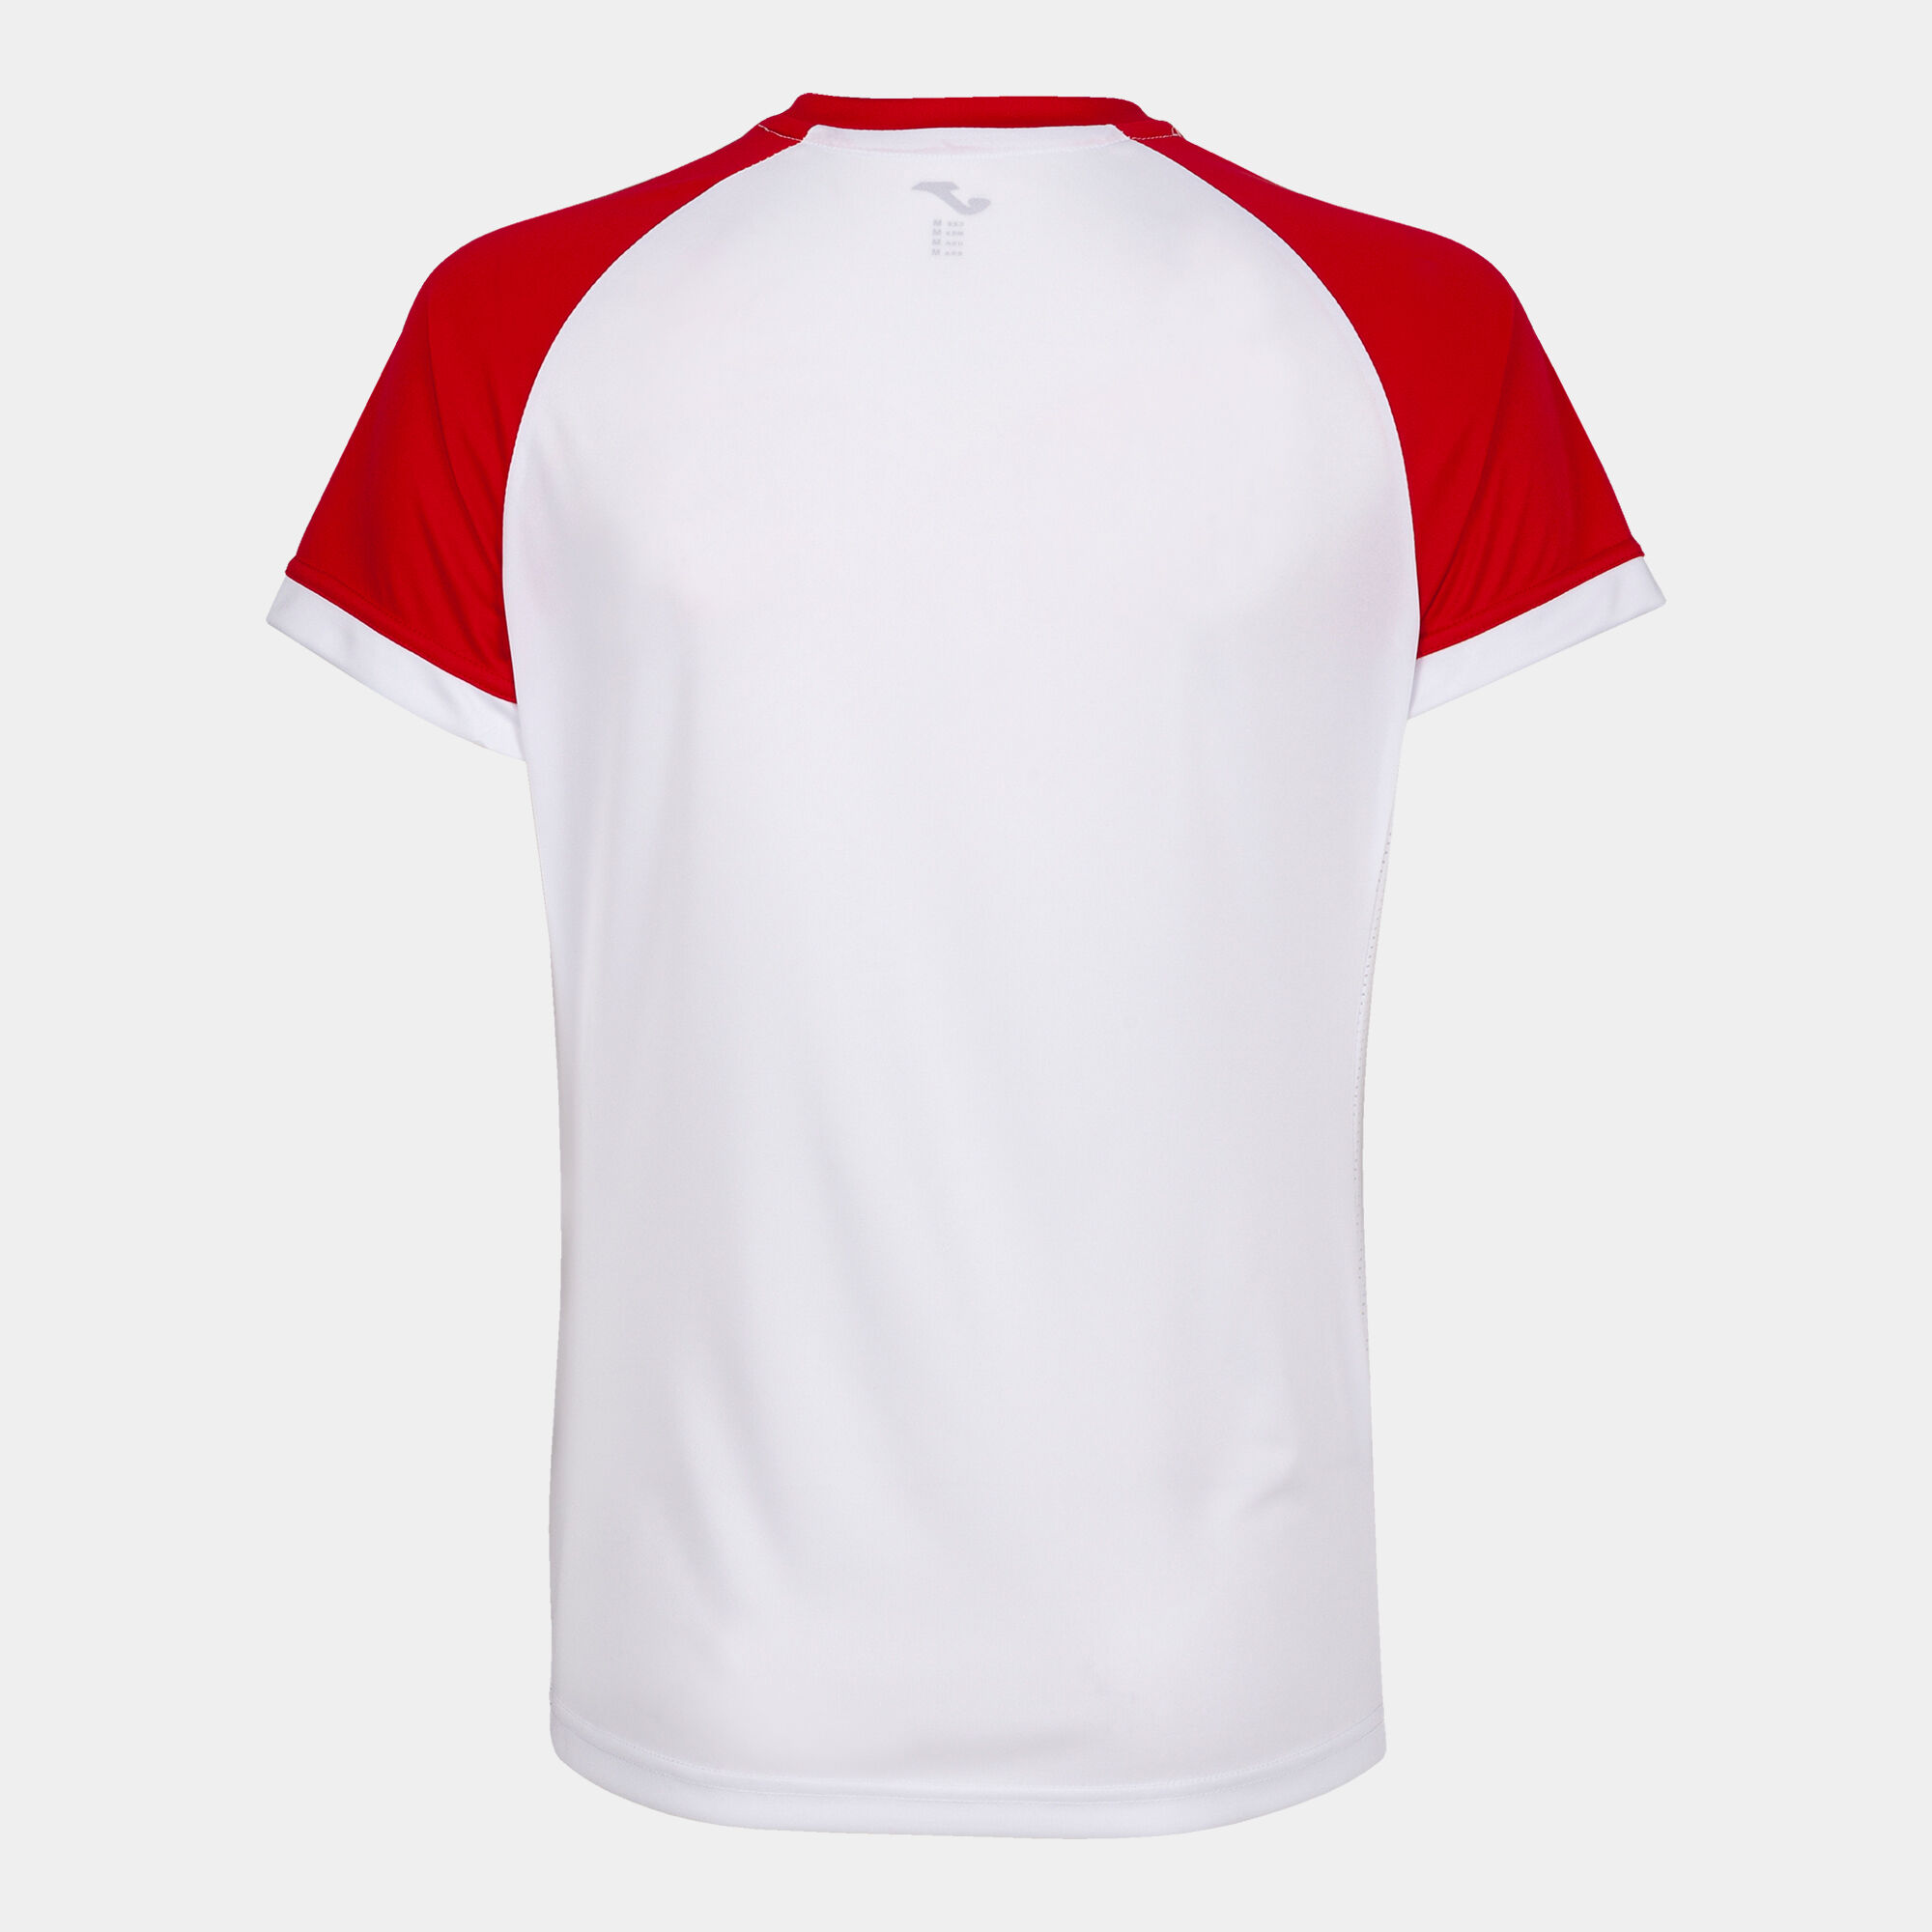 Camiseta manga corta mujer Supernova II blanco rojo